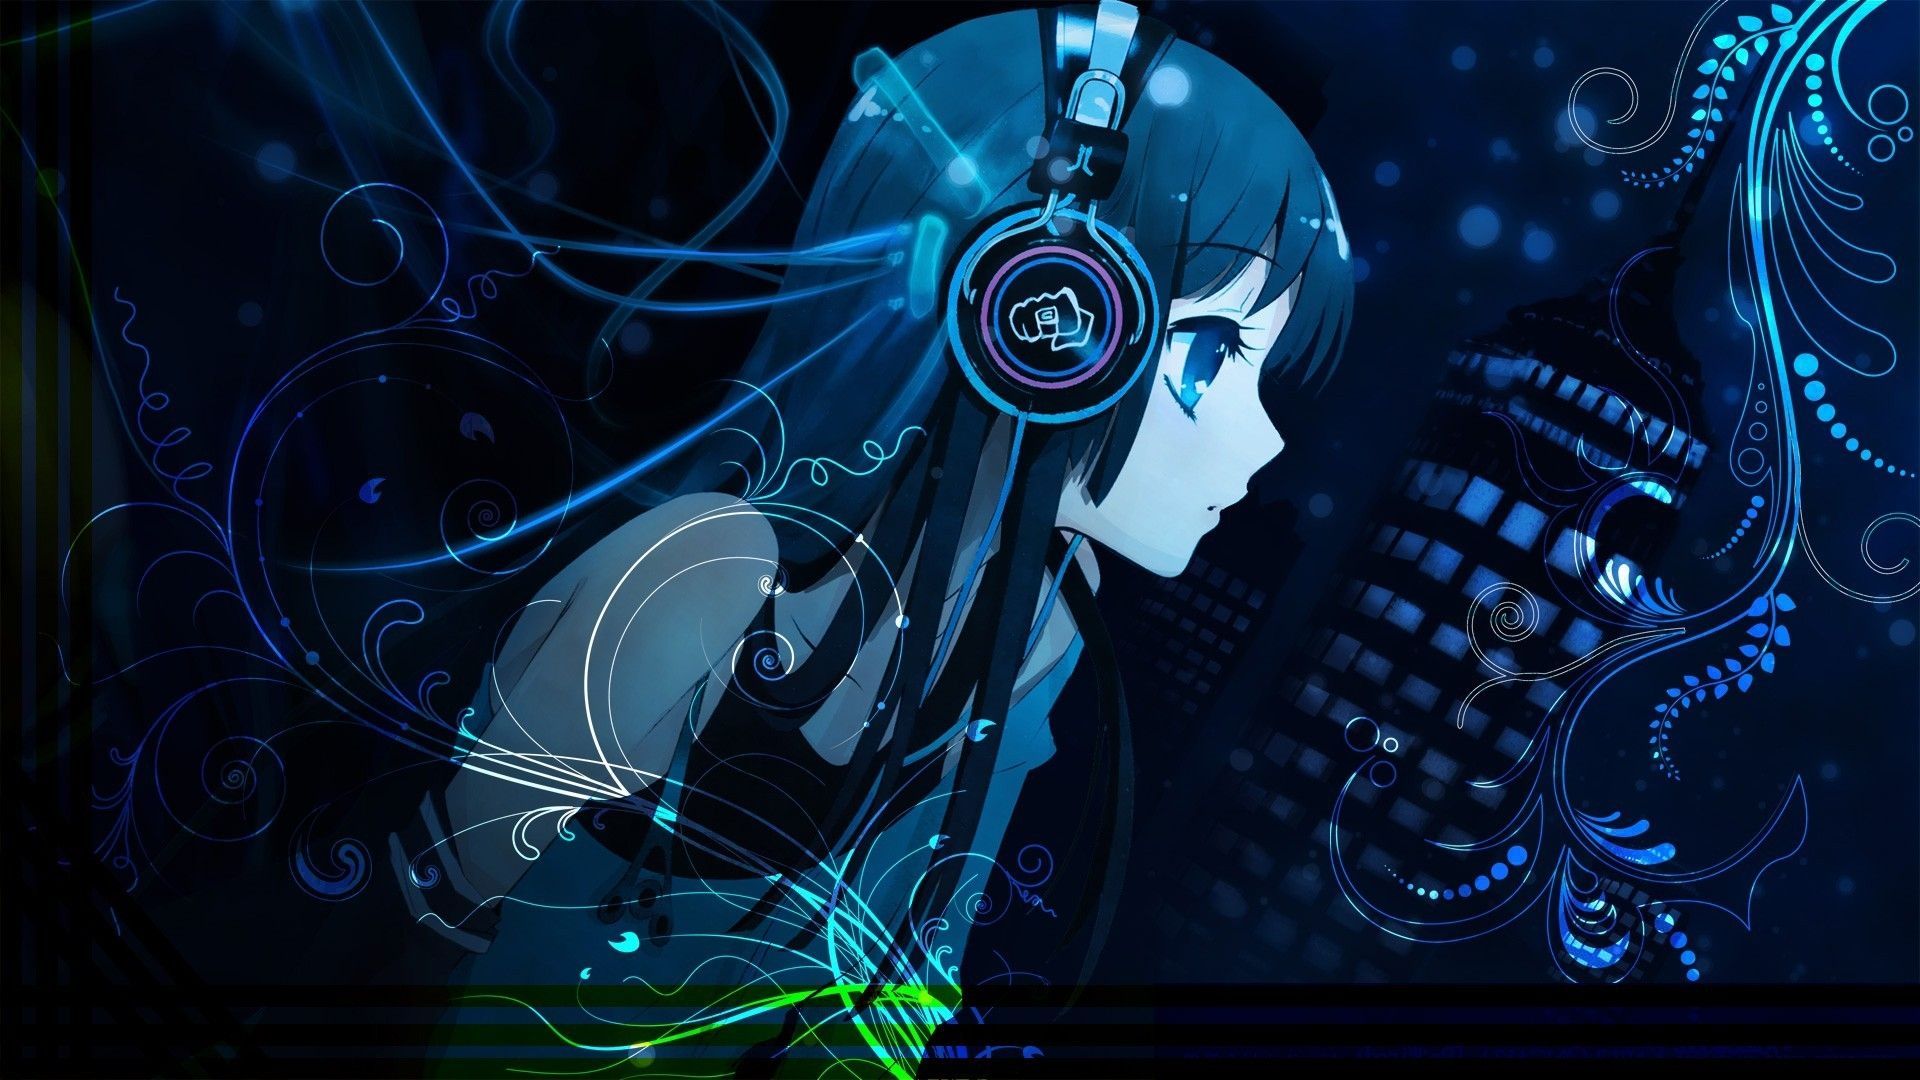 Anime Girl with Headphones Wallpaper Free Anime Girl